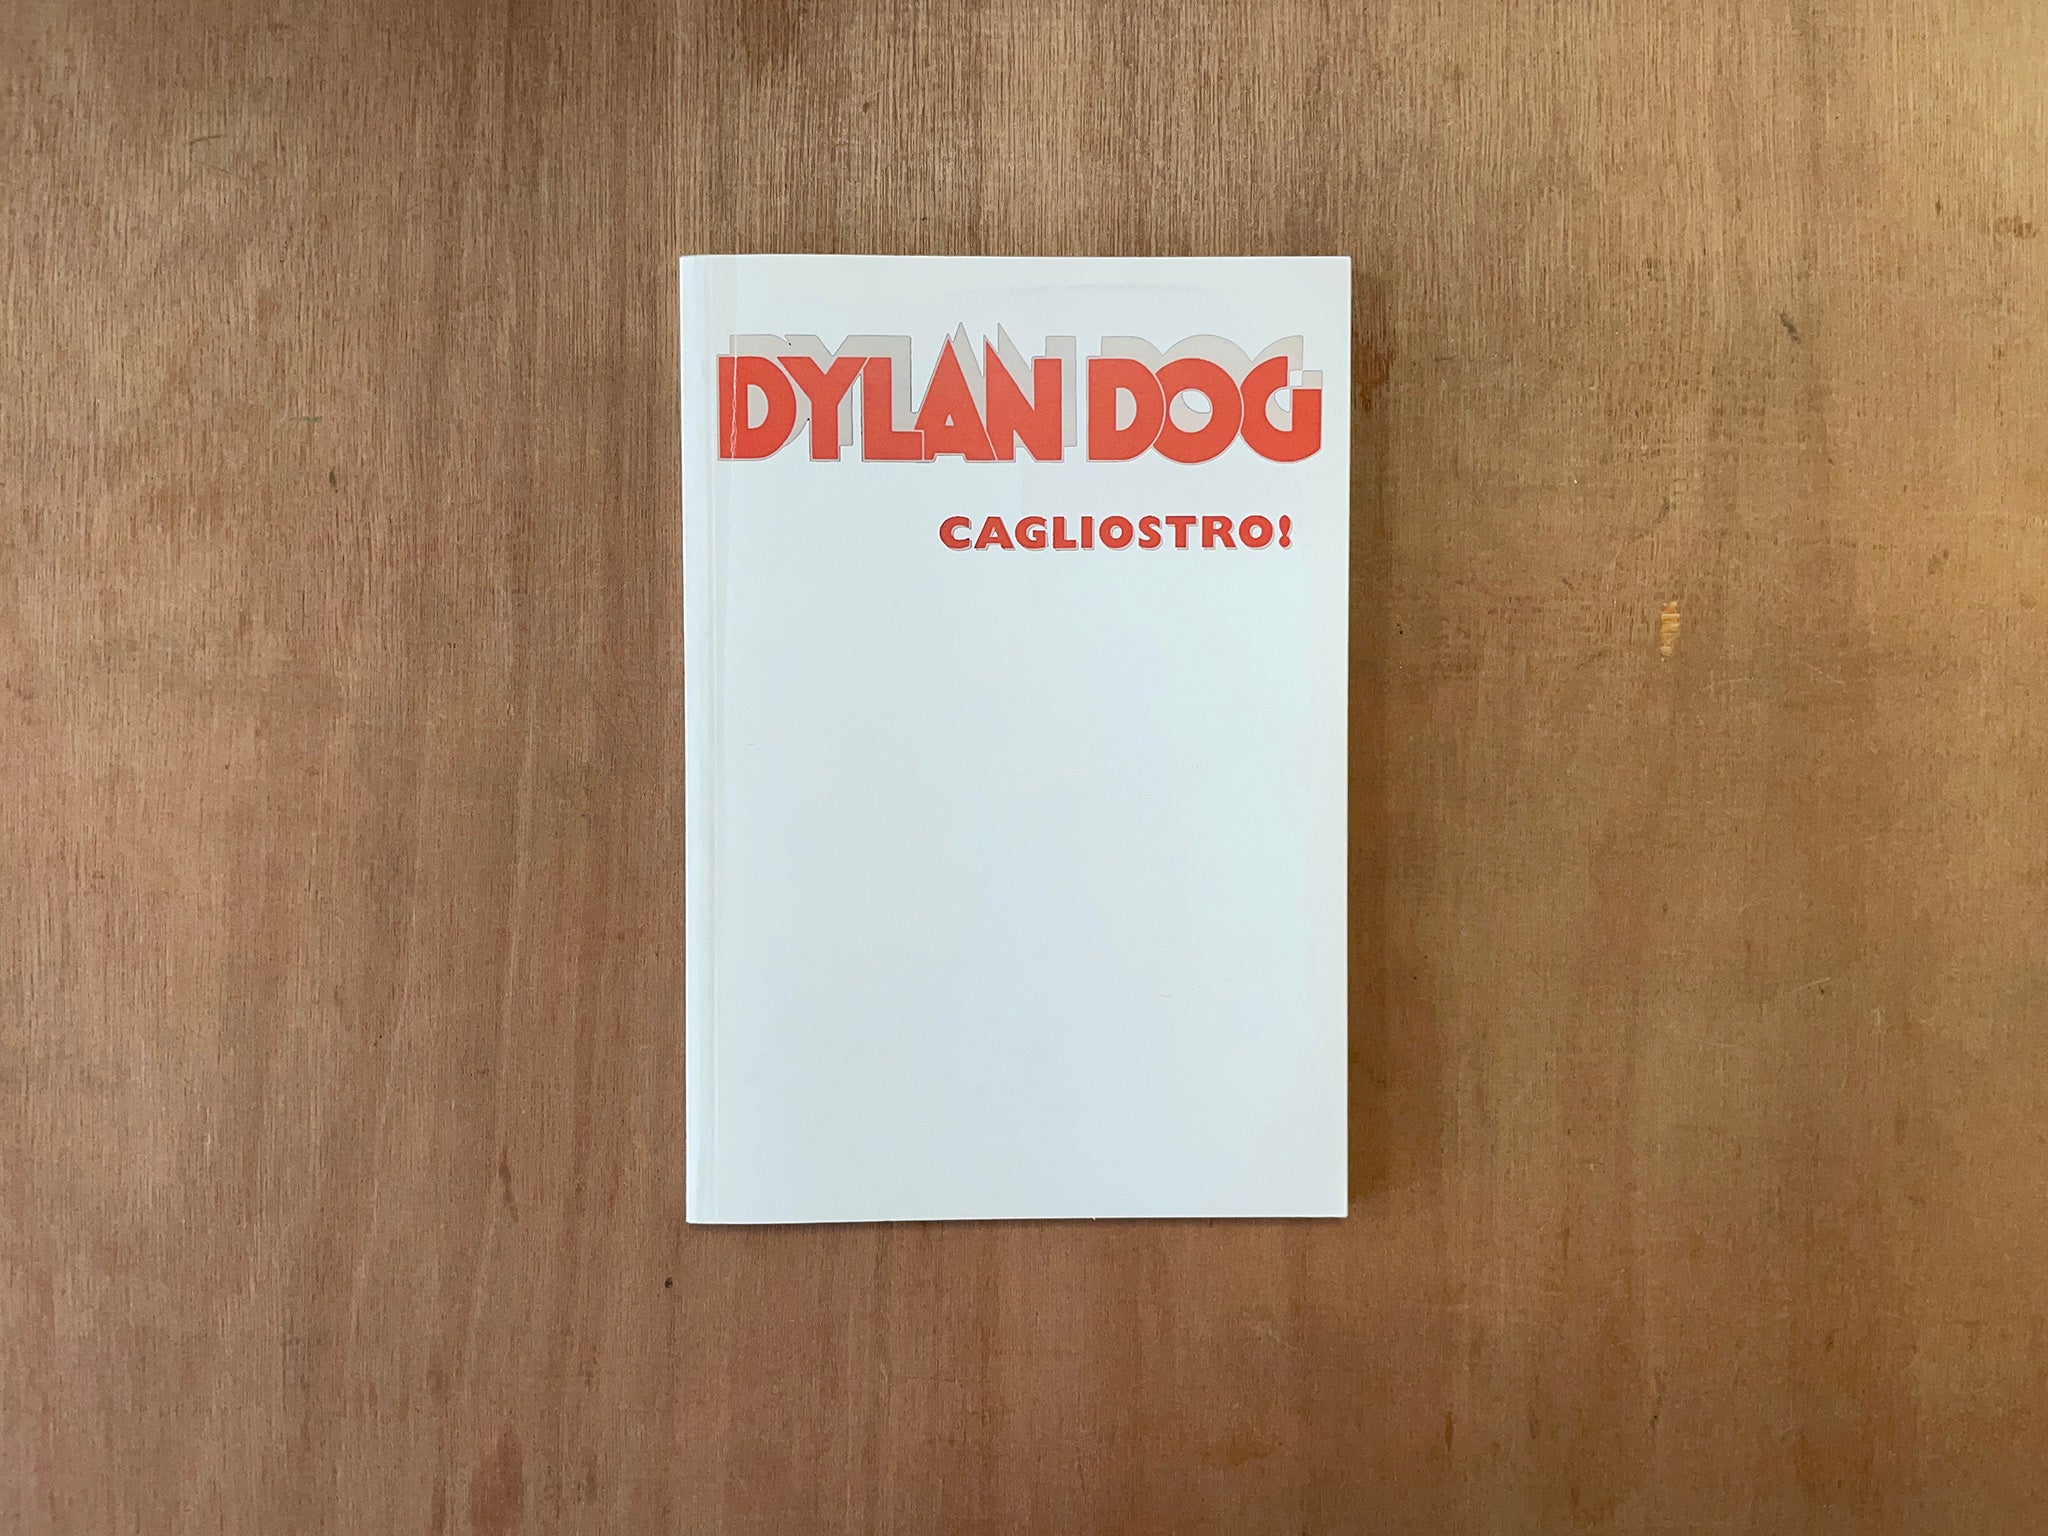 DYLAN DOG - VOL. 12 CAGLIOSTRO! by Adnan Balet Balcinovic